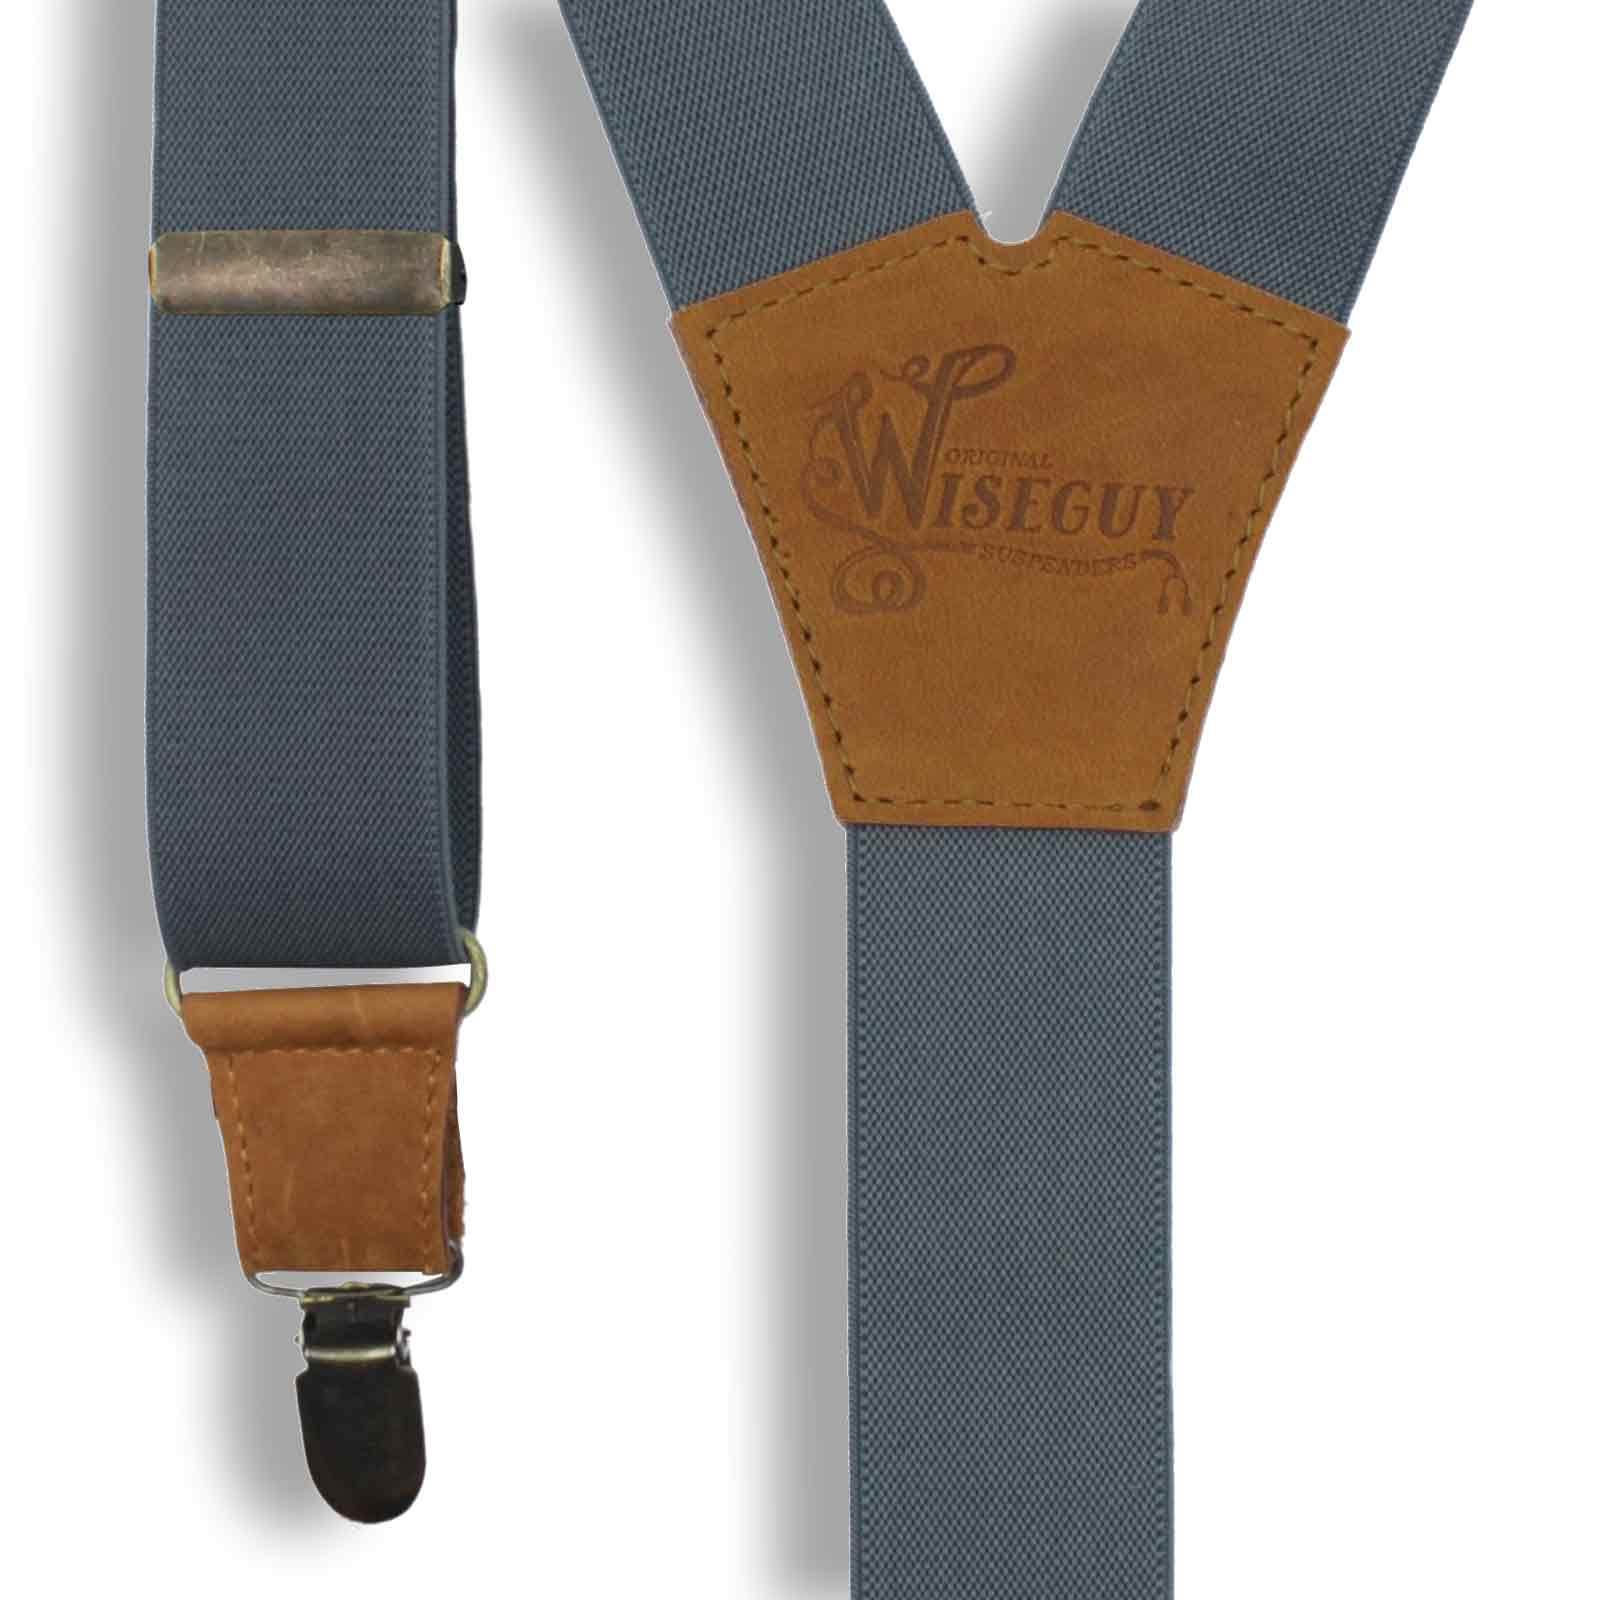 Gray on Camel Brown Suspenders wide straps (1.36 inch/3.5 cm) - Wiseguy Suspenders